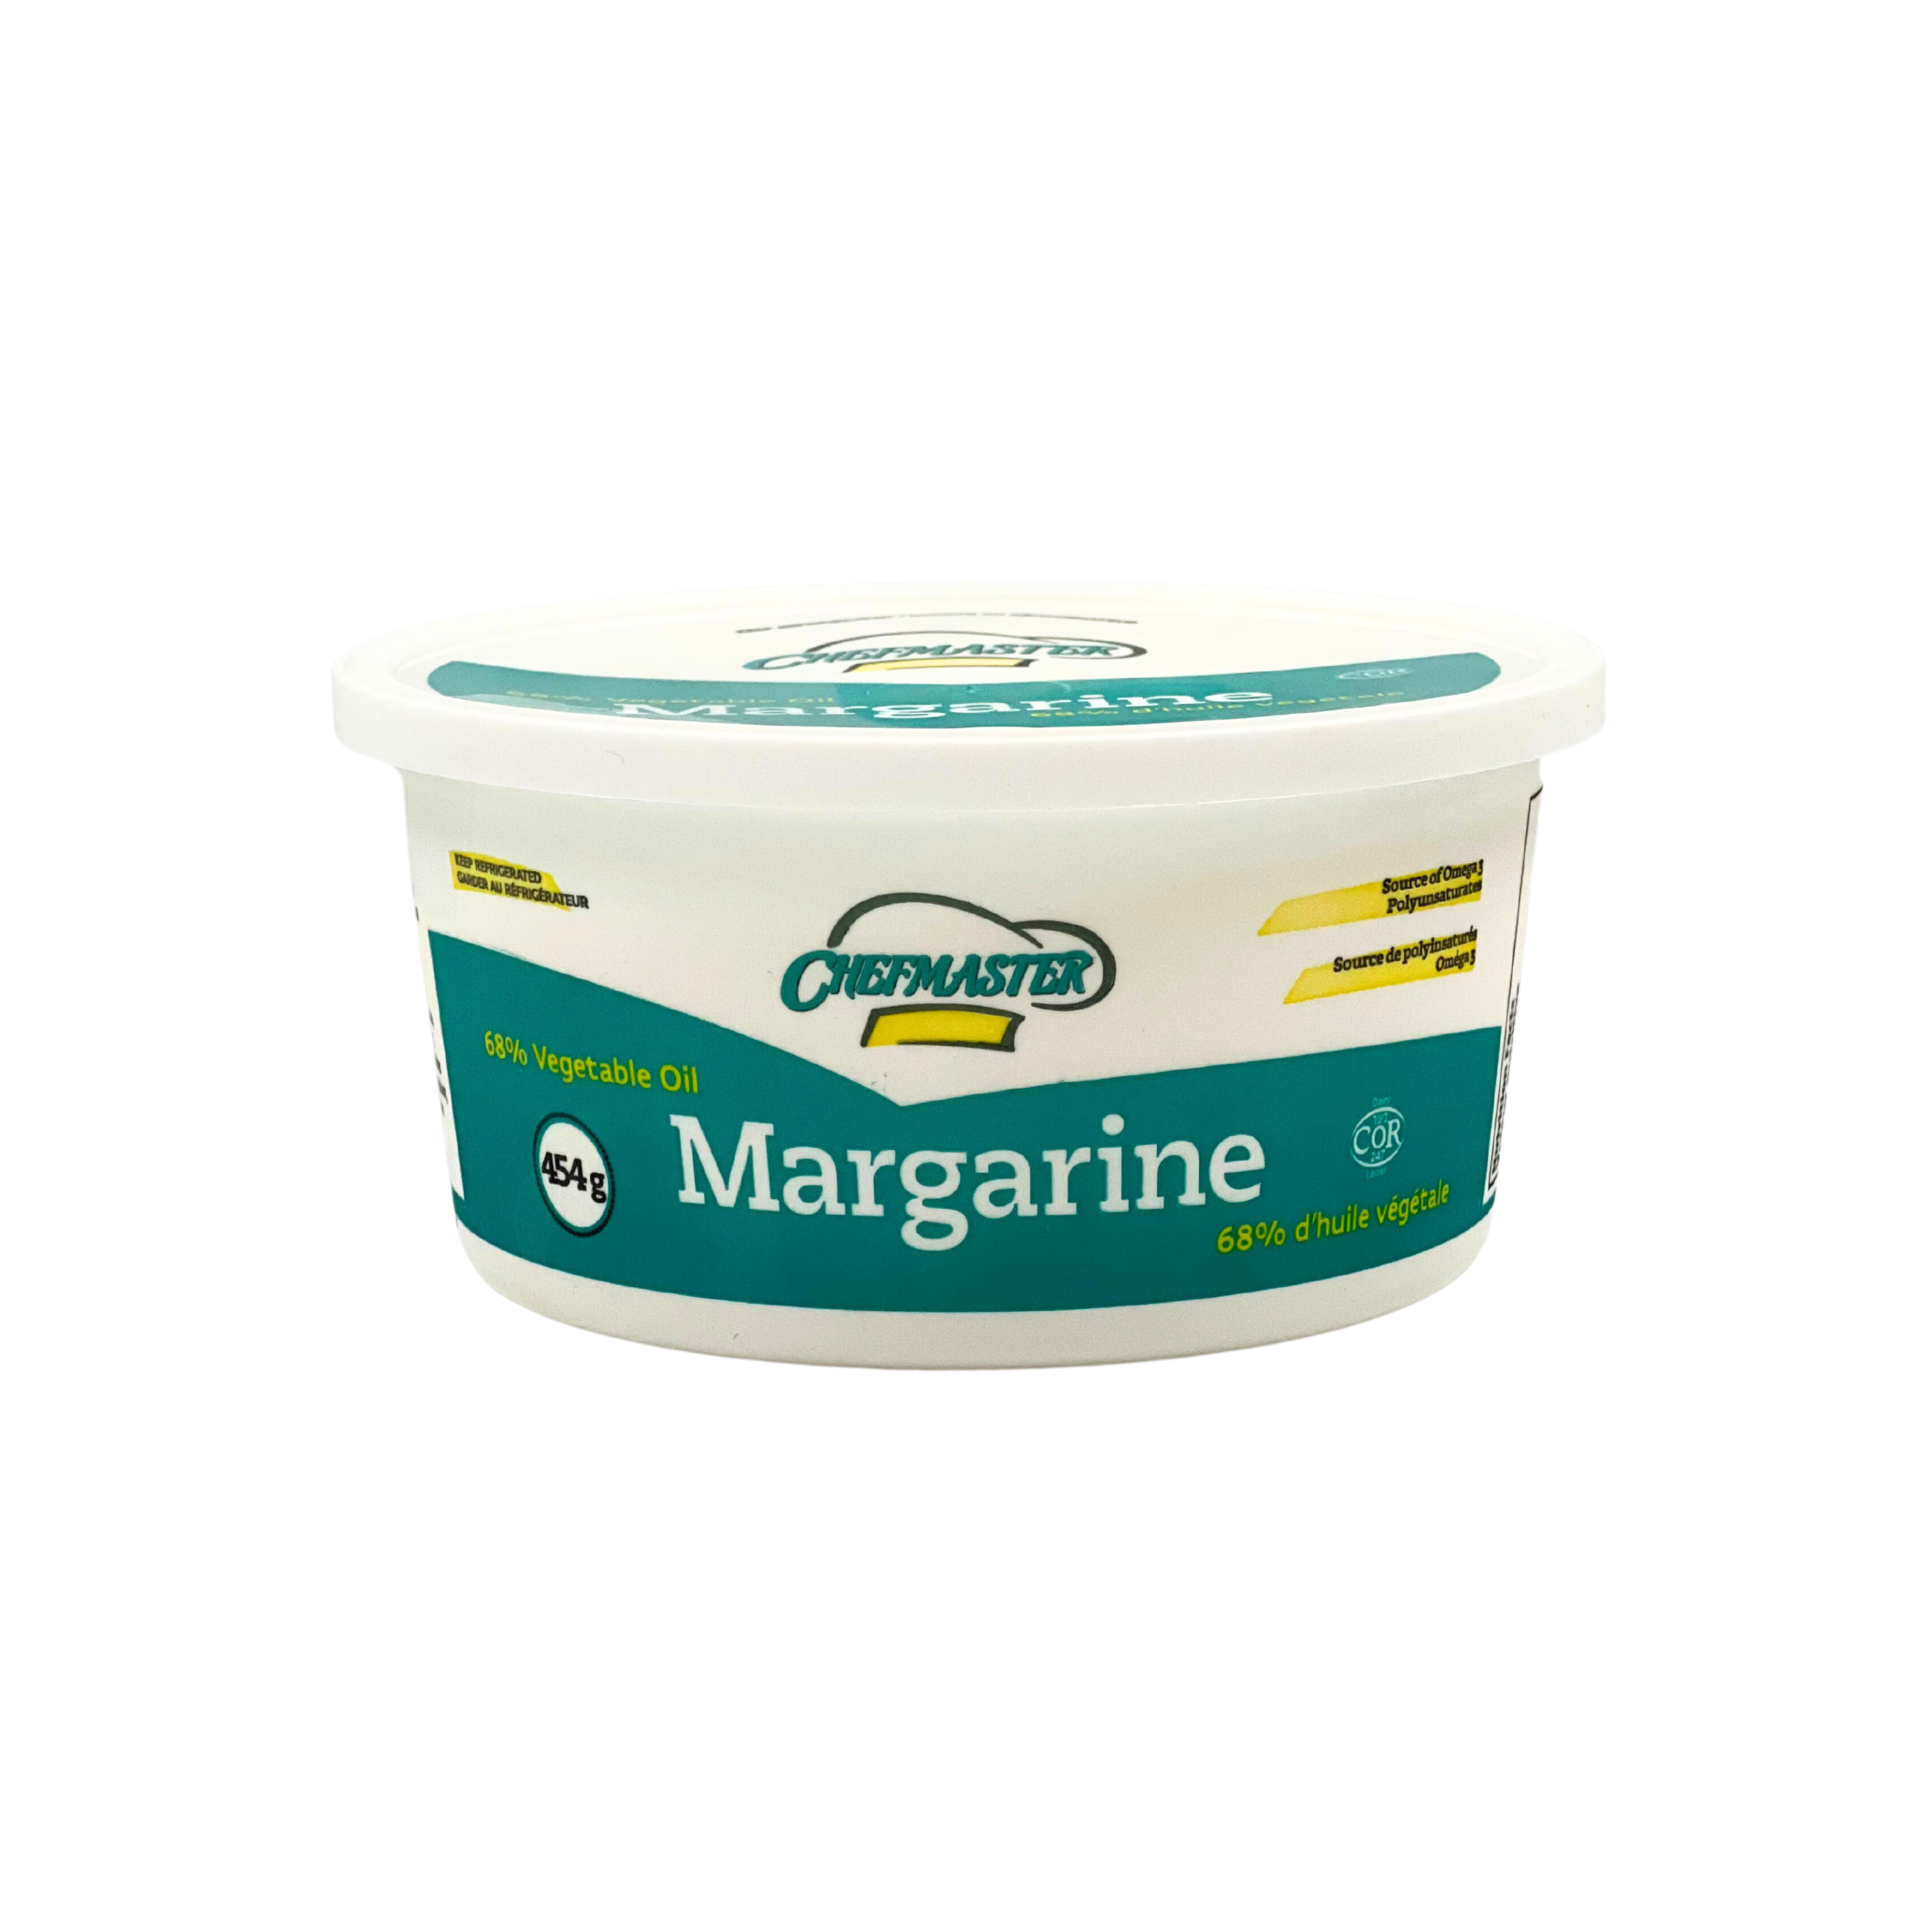 Chefmaster Margarine 454g-1